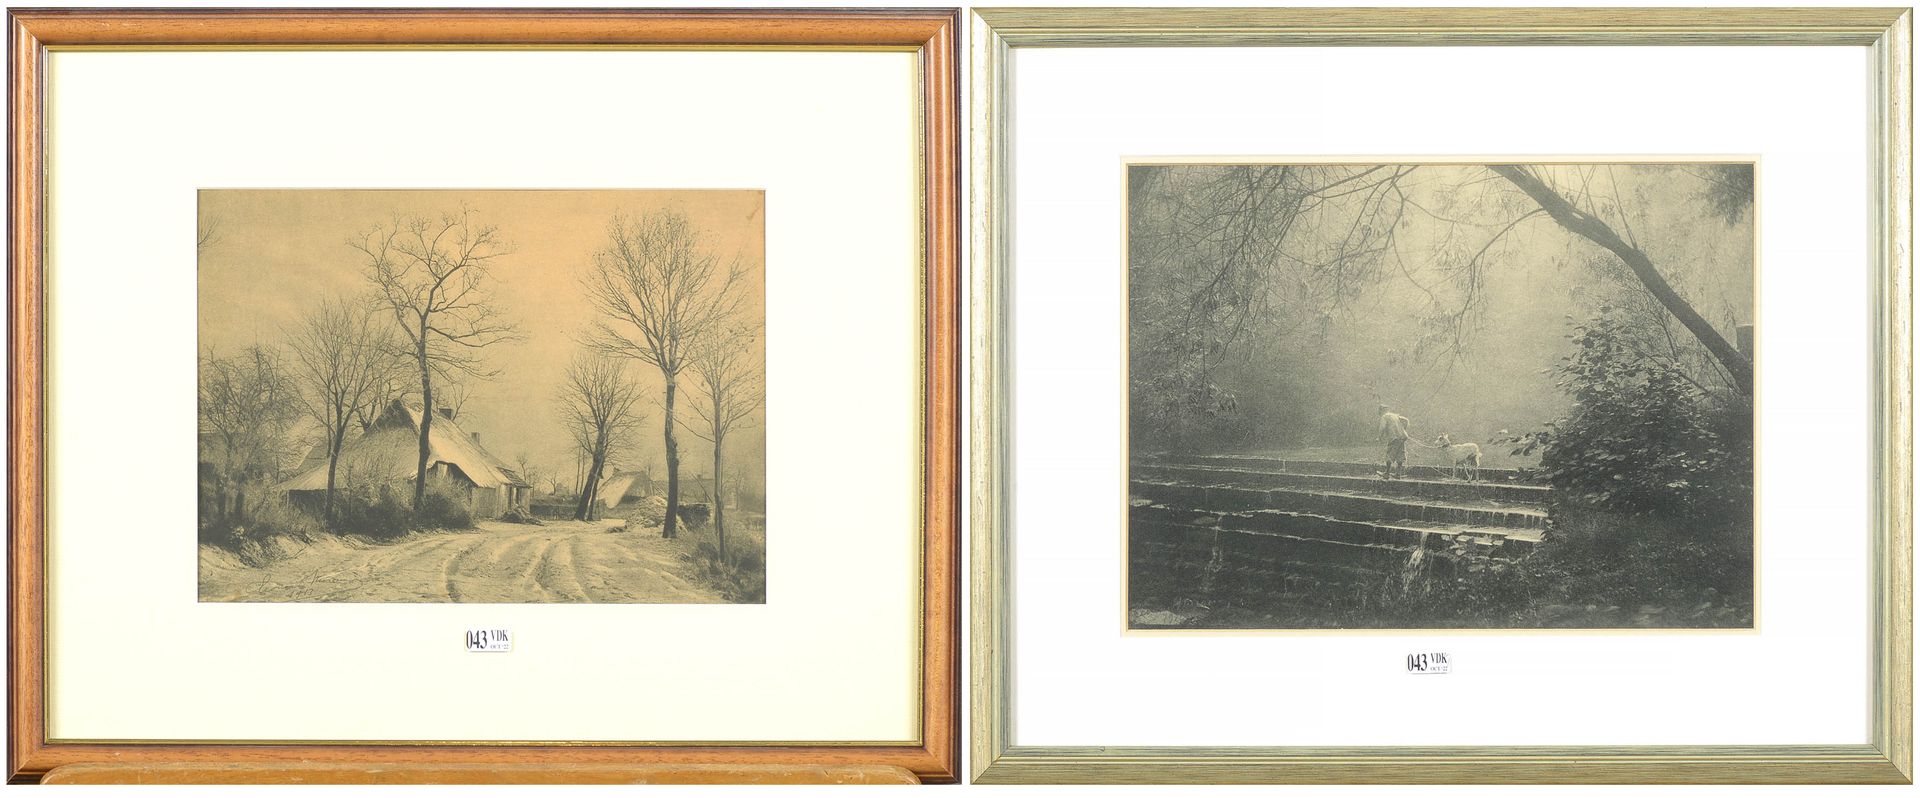 MISONNE Léonard (1870 - 1943) 两张中色印刷的照片《坎皮内的冬天》和《农民和他的山羊》。左下角有石墨签名Léonard Misonn&hellip;